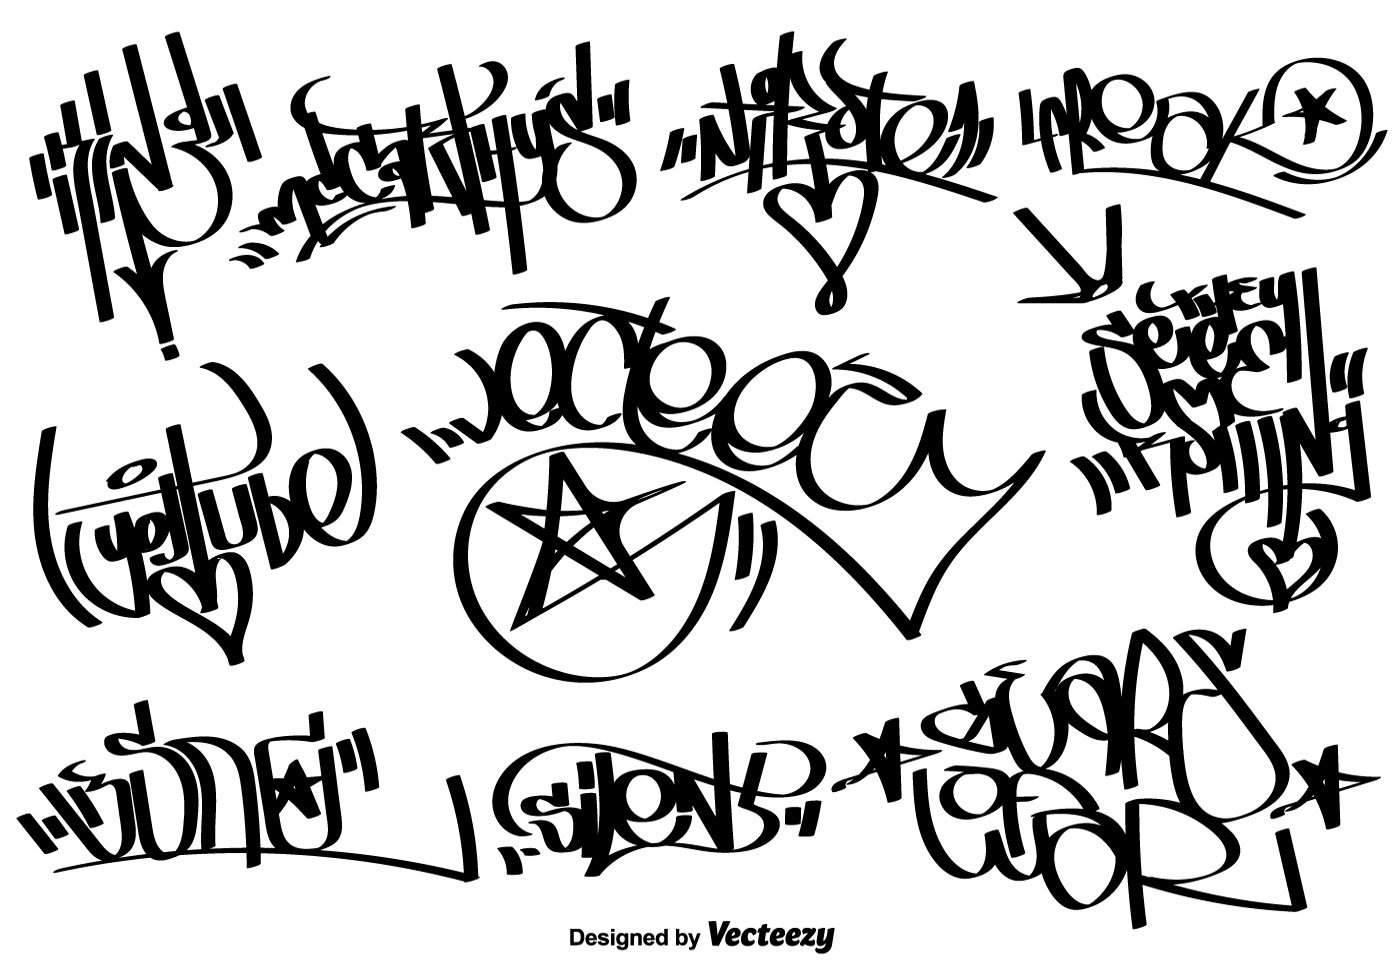 Тег tag. Теги граффити. Граффити шрифты. Крутые шрифты для граффити. Граффити шрифты для тегов.